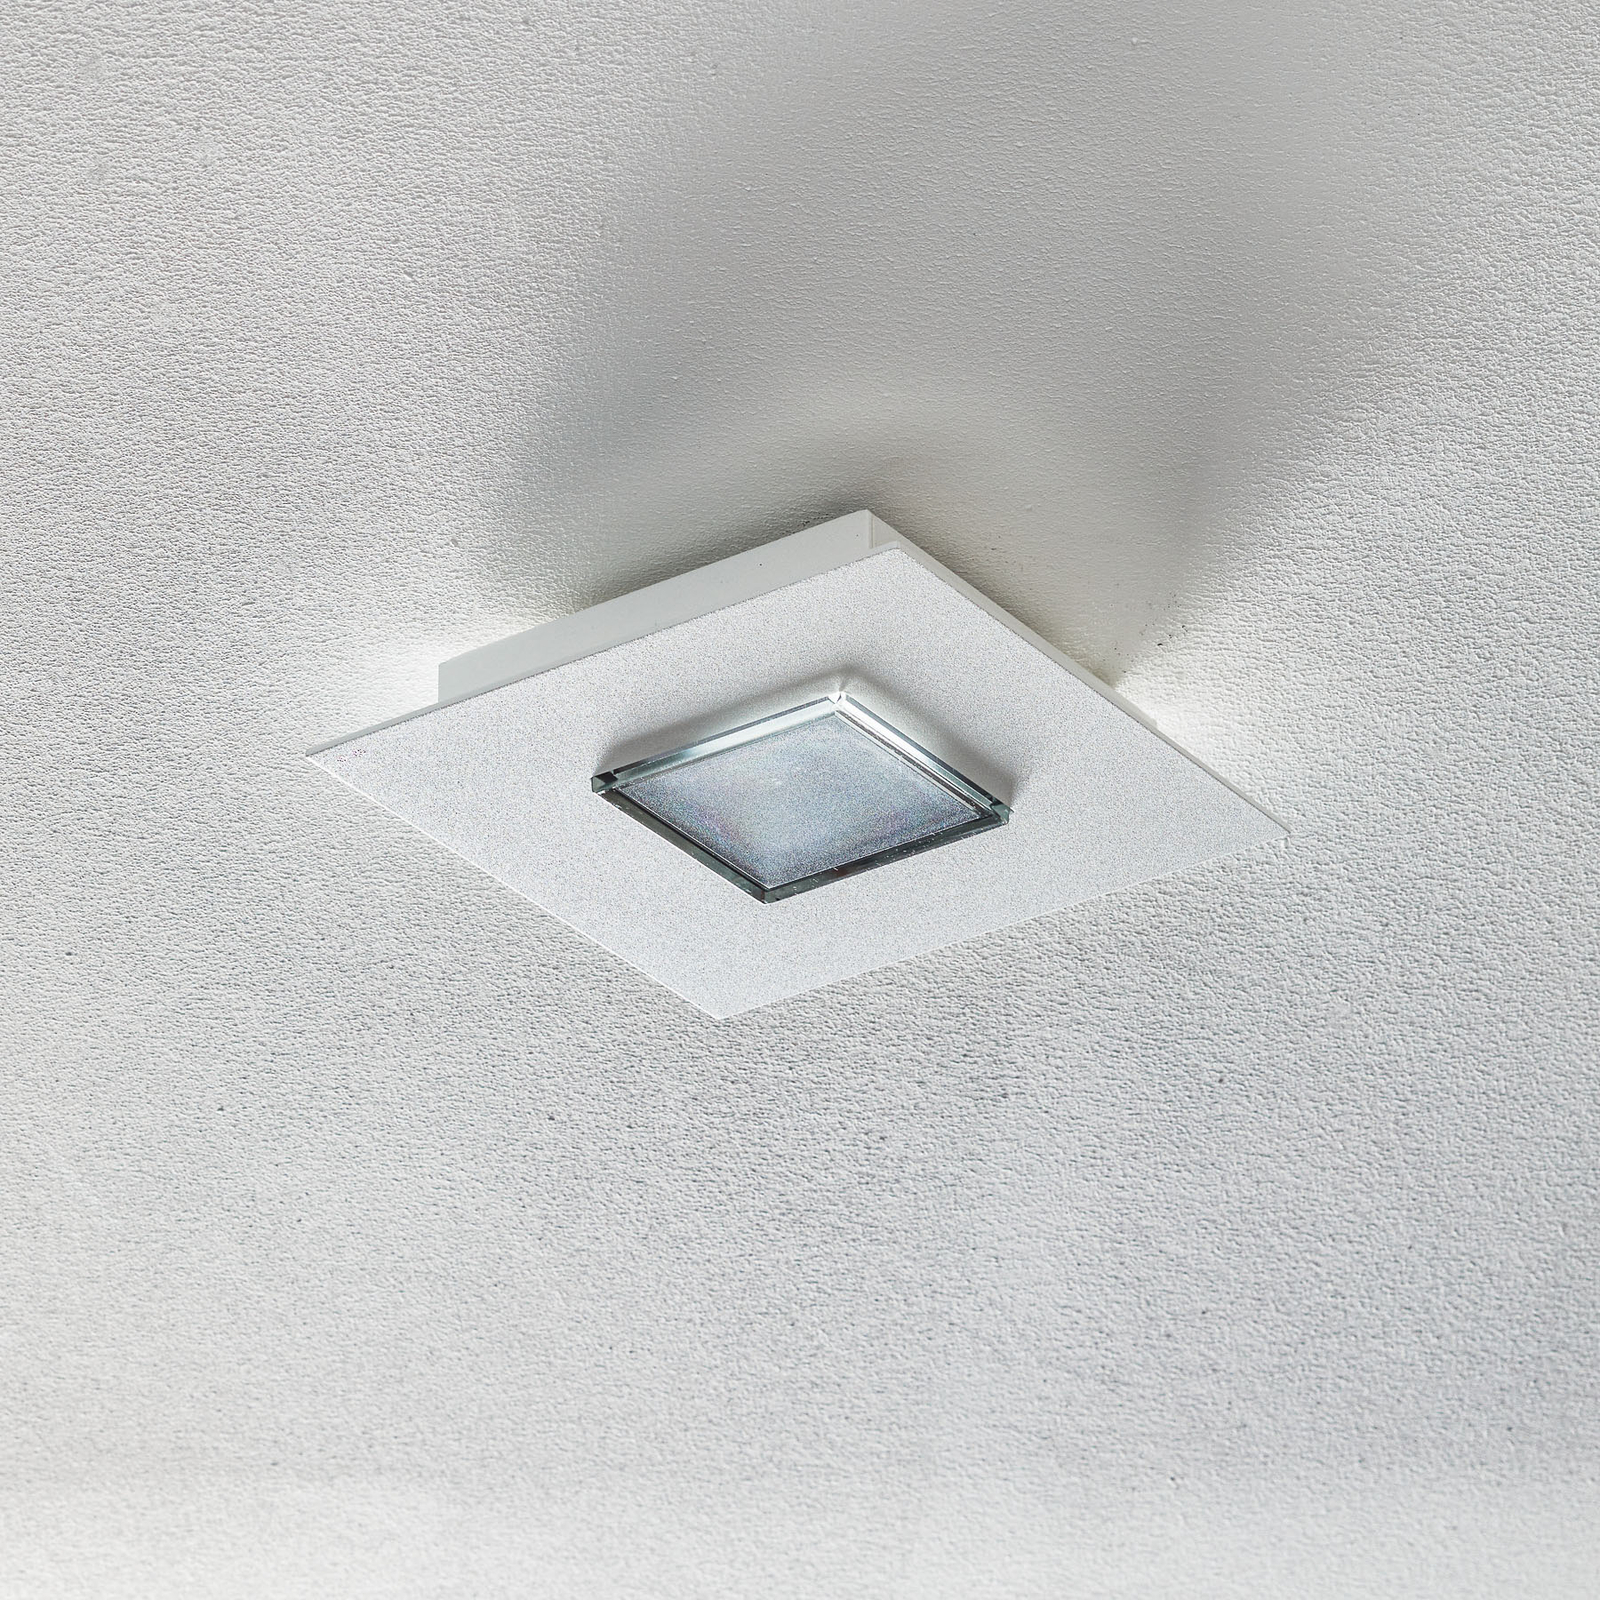 Square Quarter LED ceiling light